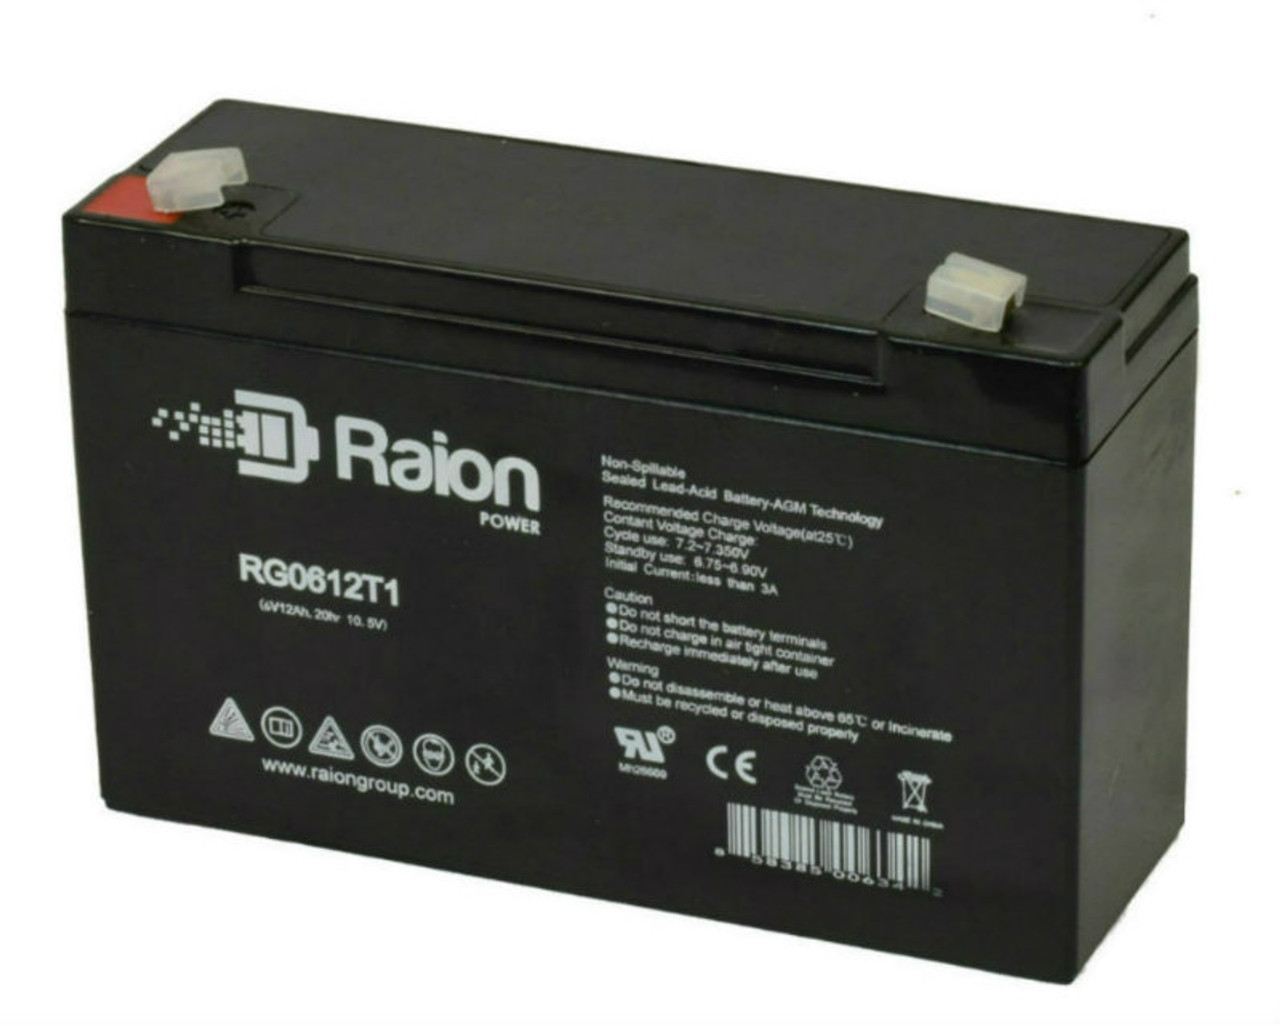 Raion Power RG06120T1 6V 12Ah Replacement UPS Battery Cartridge for Eaton PowerWare PW3115-650VA